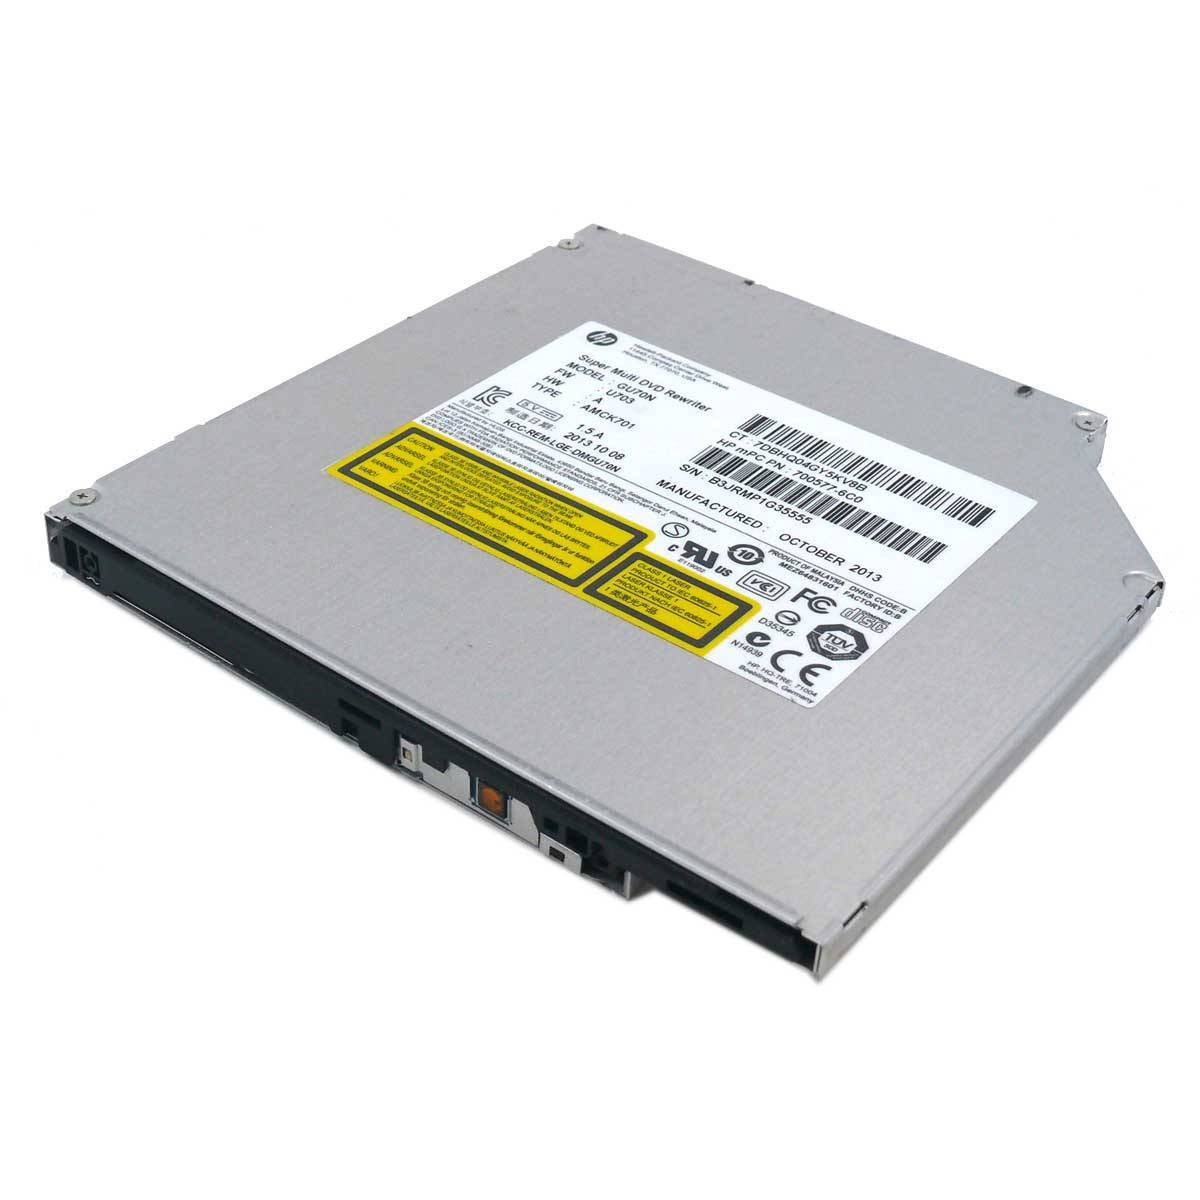 DVD-Brenner HP GU70N 9mm slim SATA gebraucht